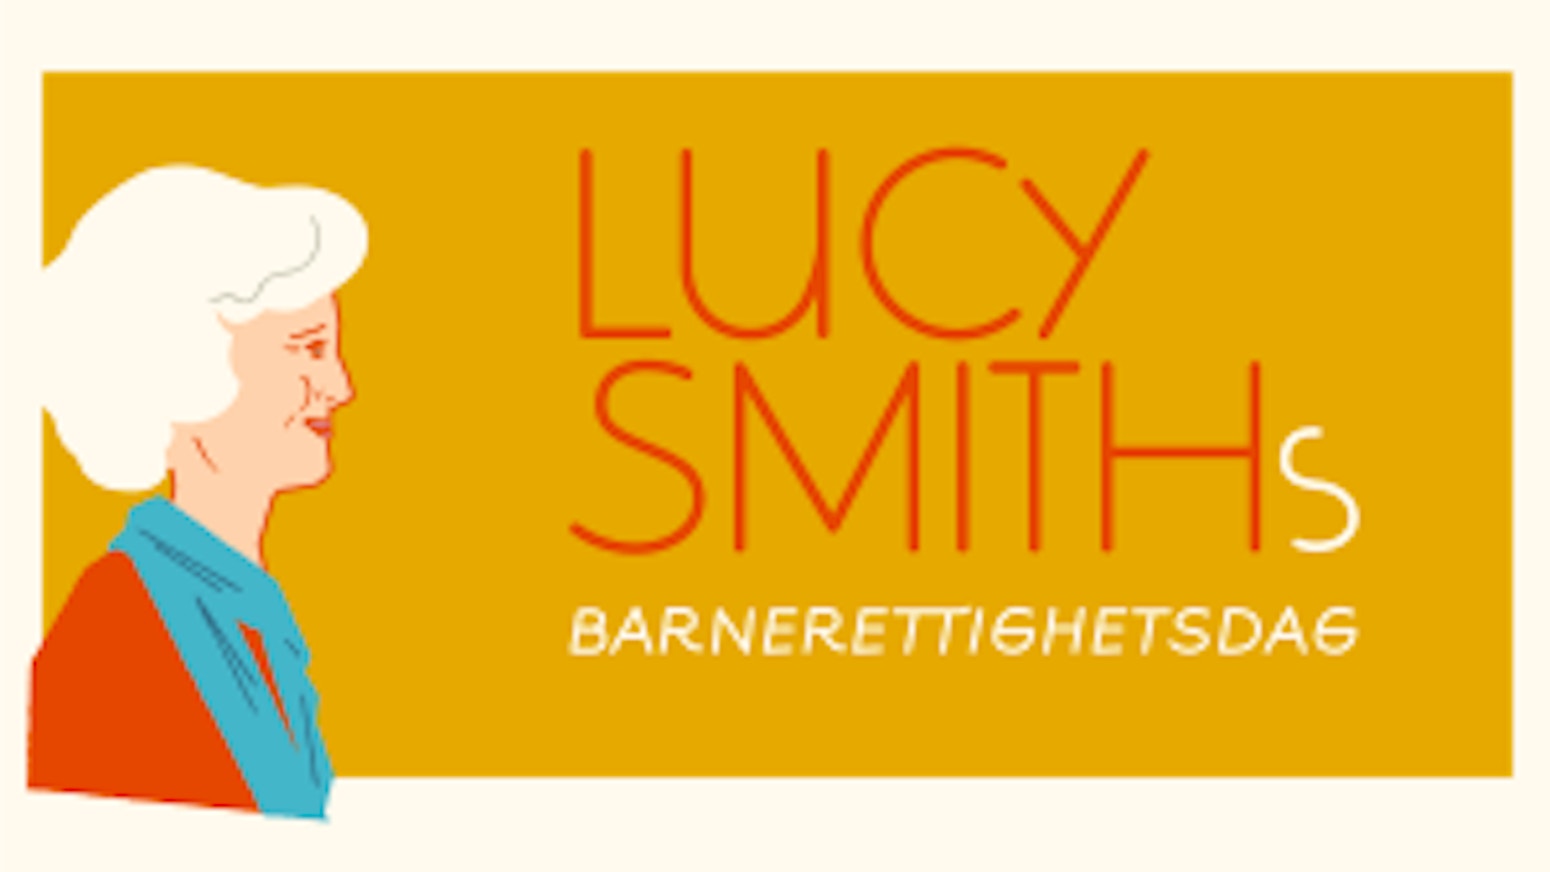 Lucy smith barnerettighetsdag logo